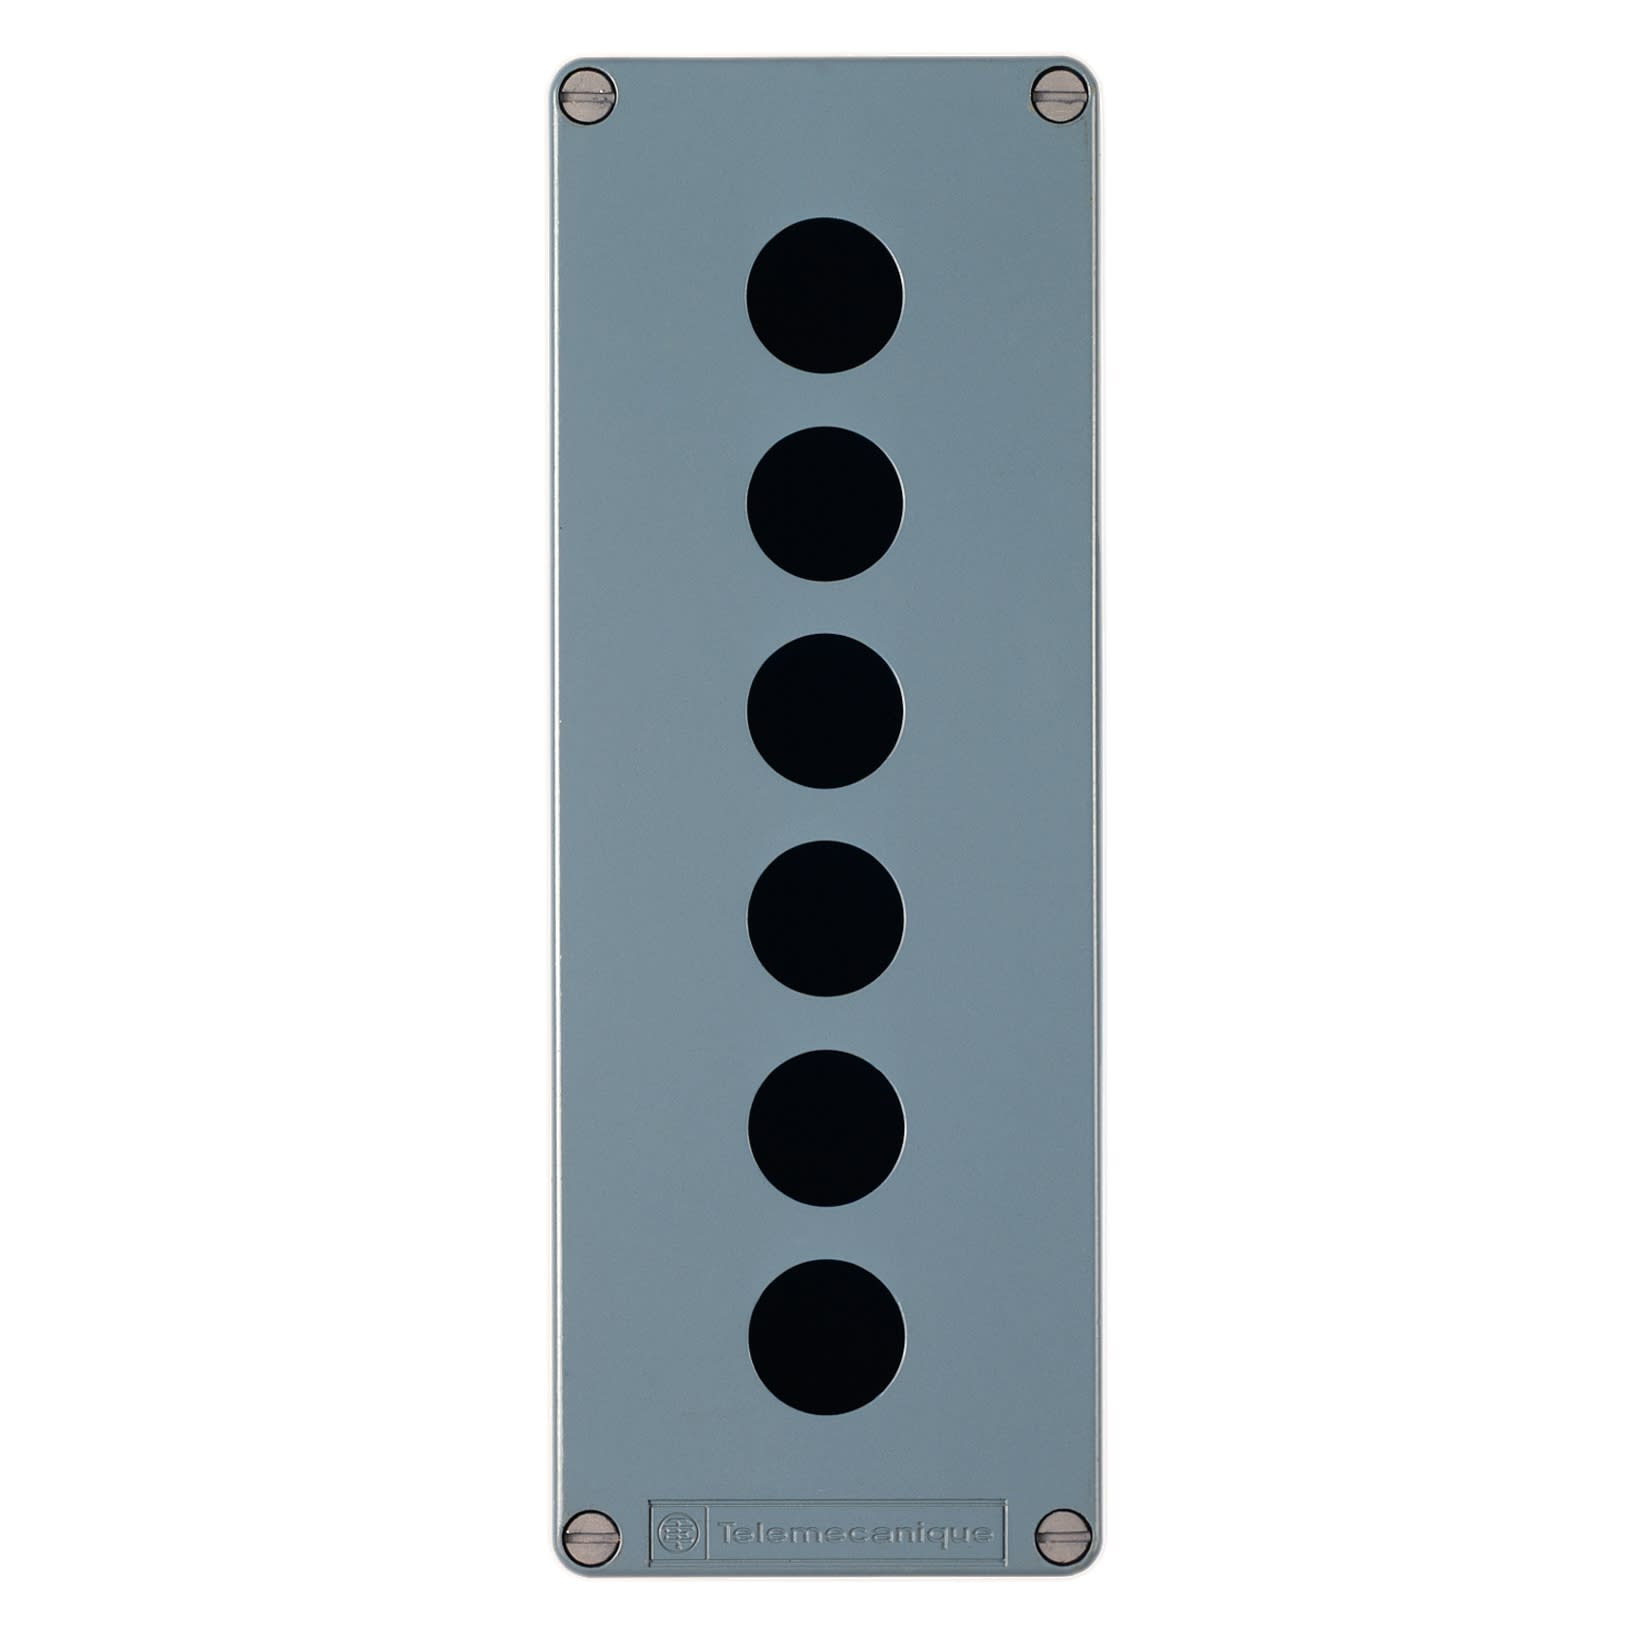 Schneider Electric - Harmony XAPM - boite a boutons vide - metallique - 6 percages horizontaux